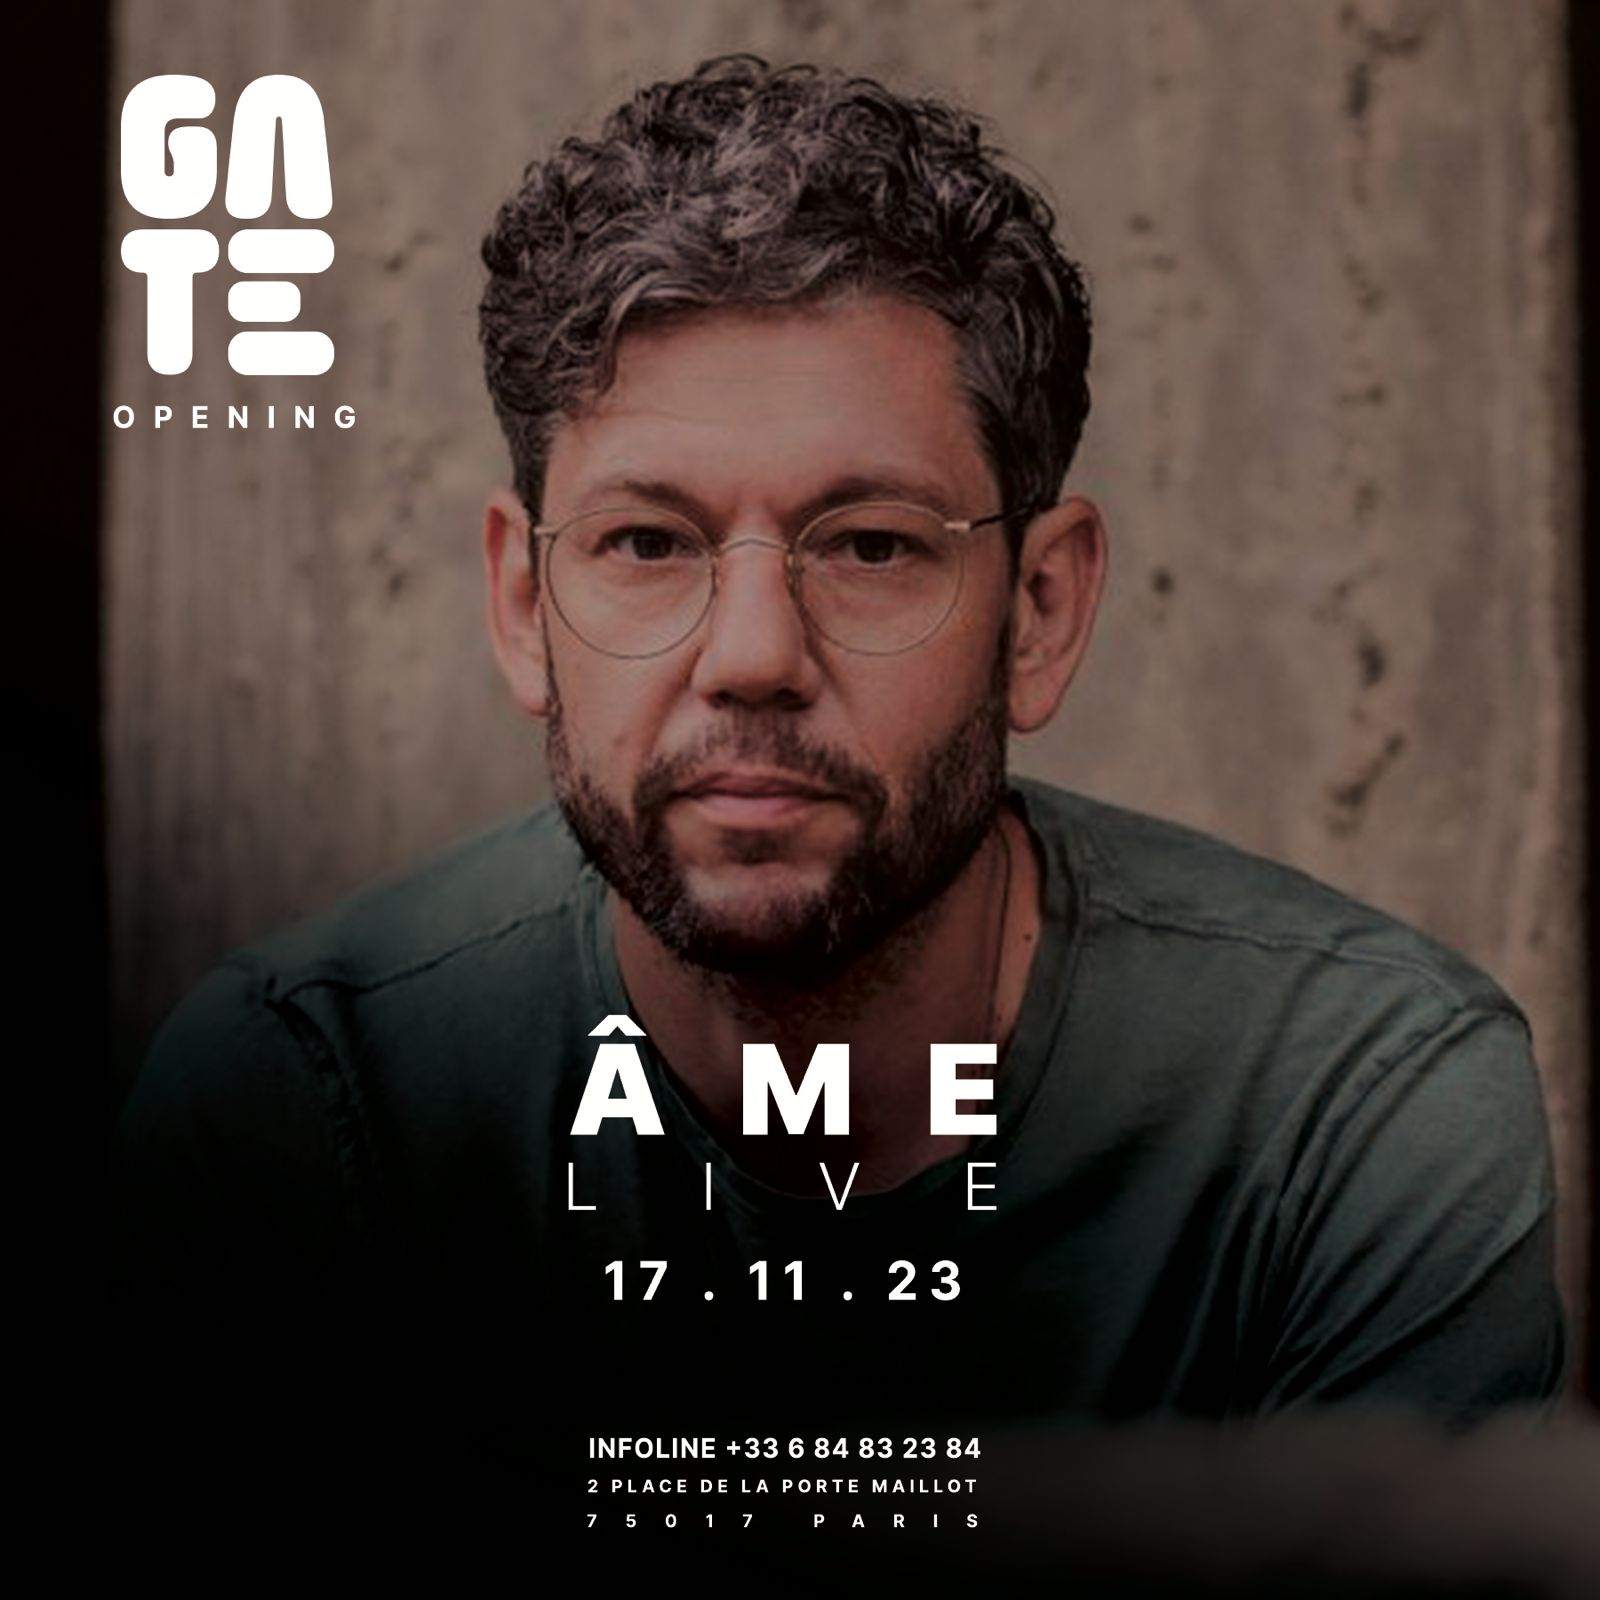 GATE club opening with Âme live - Página trasera